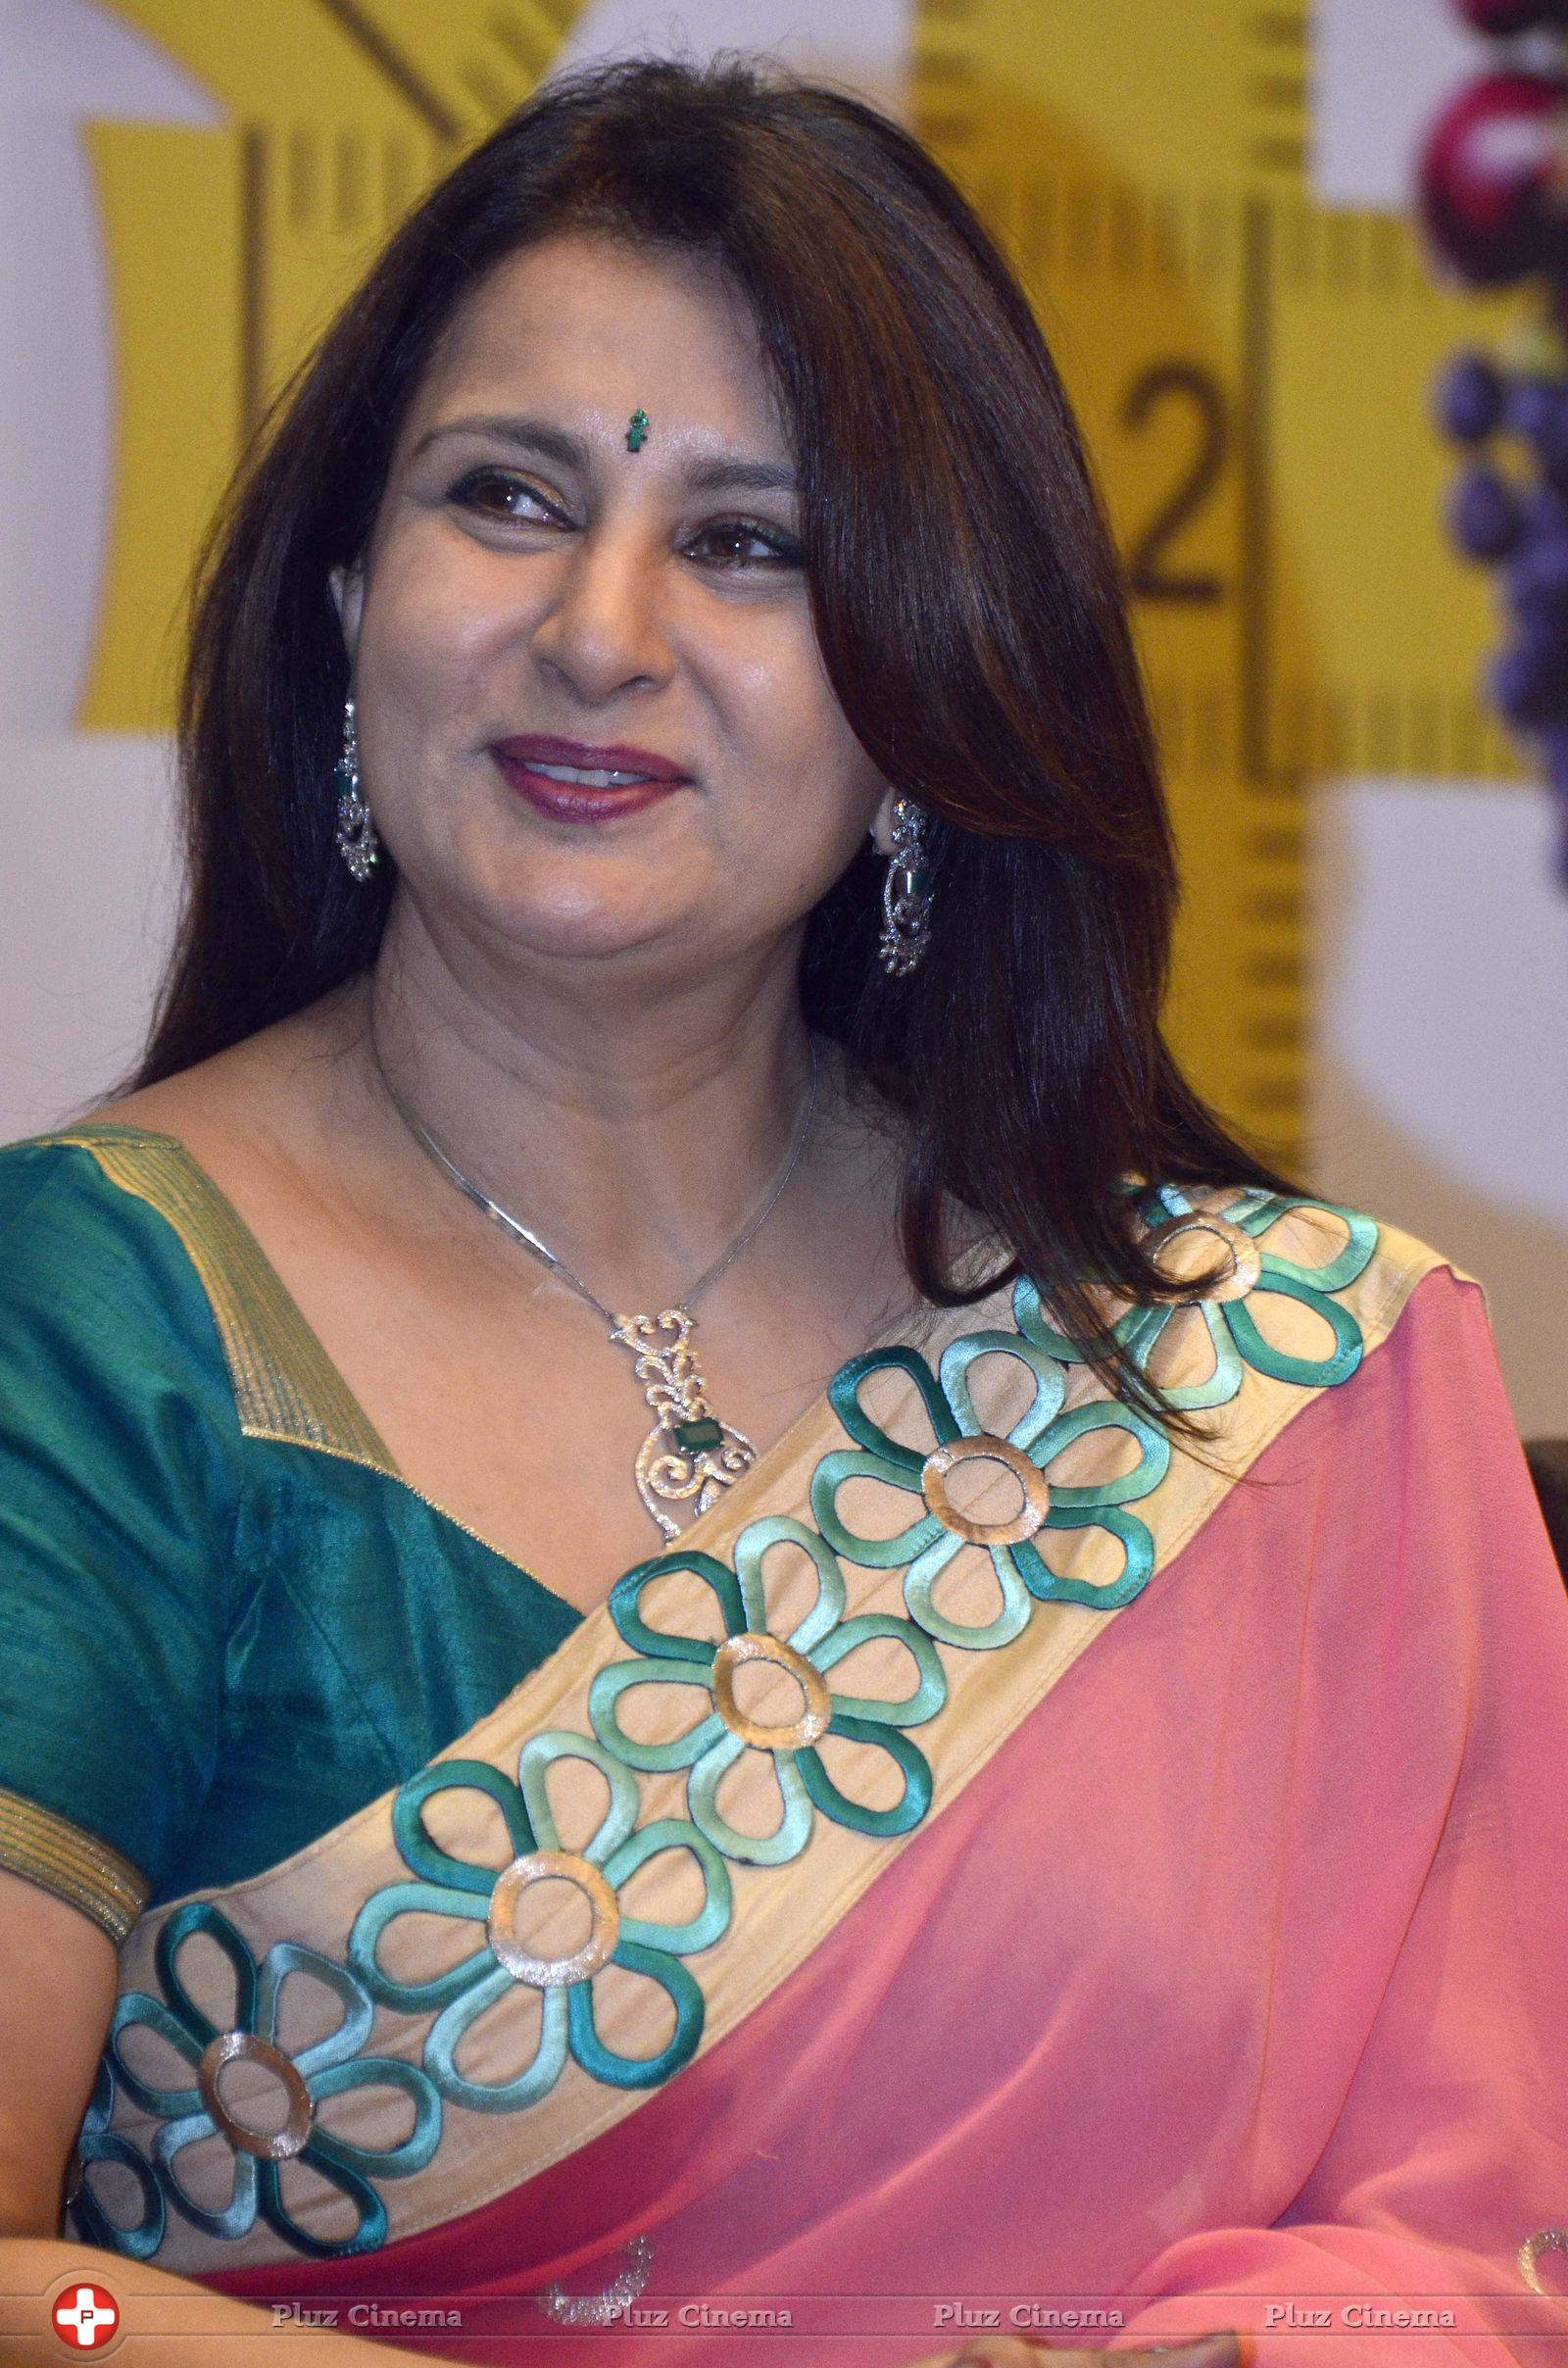 Image Of Actress Poonam Dhillon